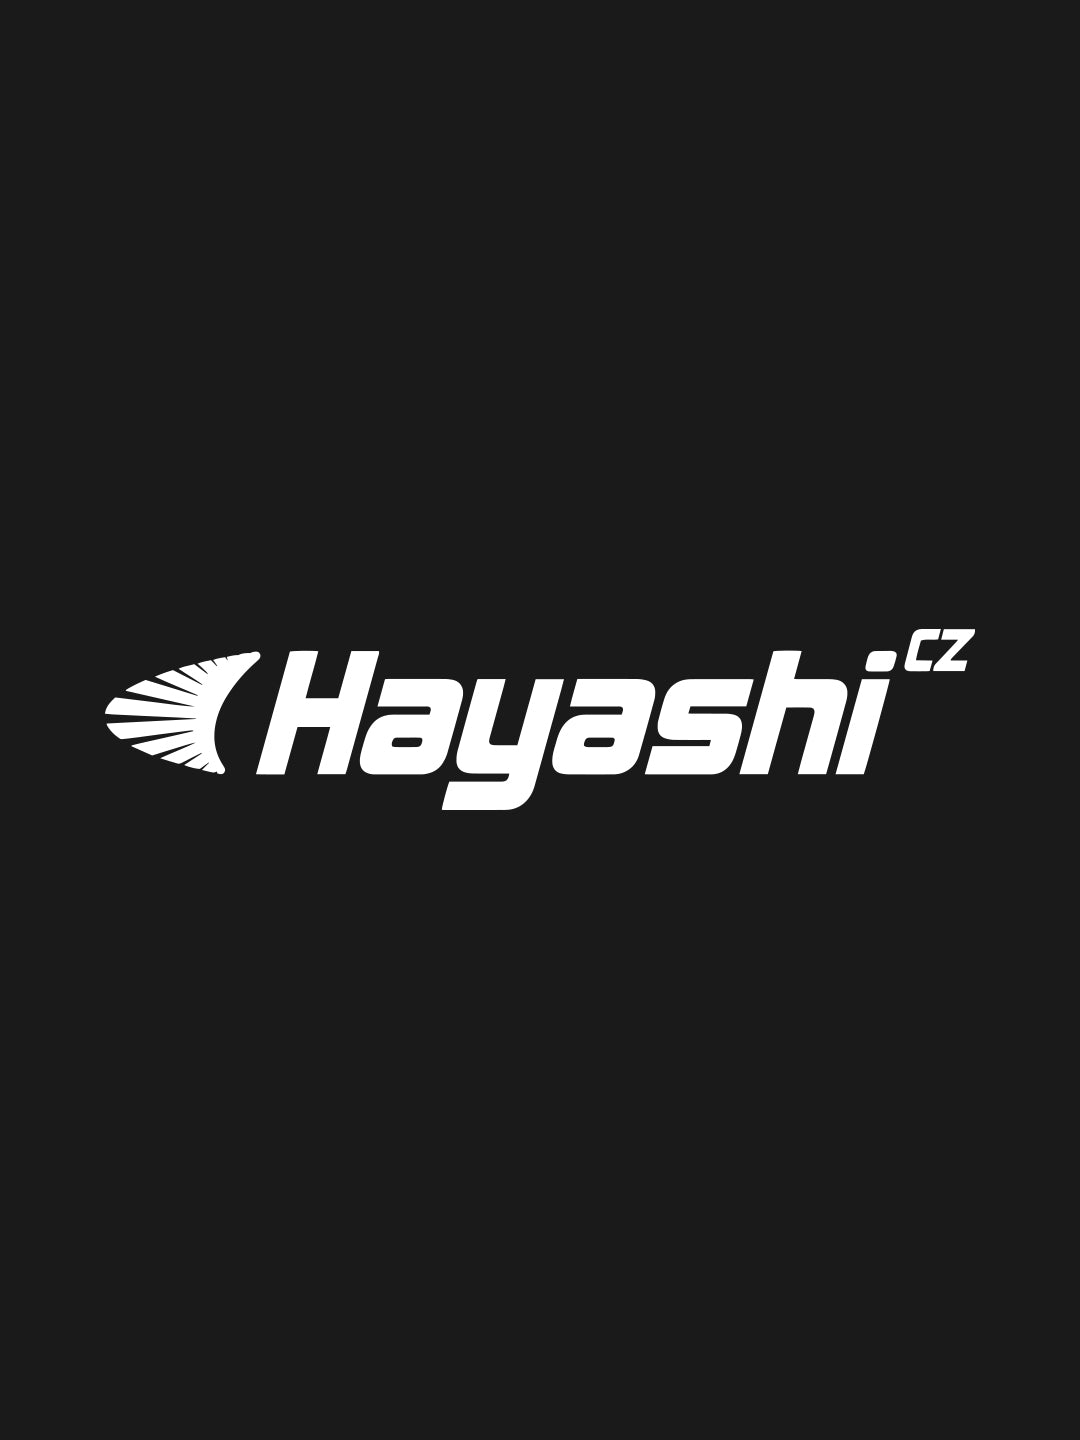 Hayashi